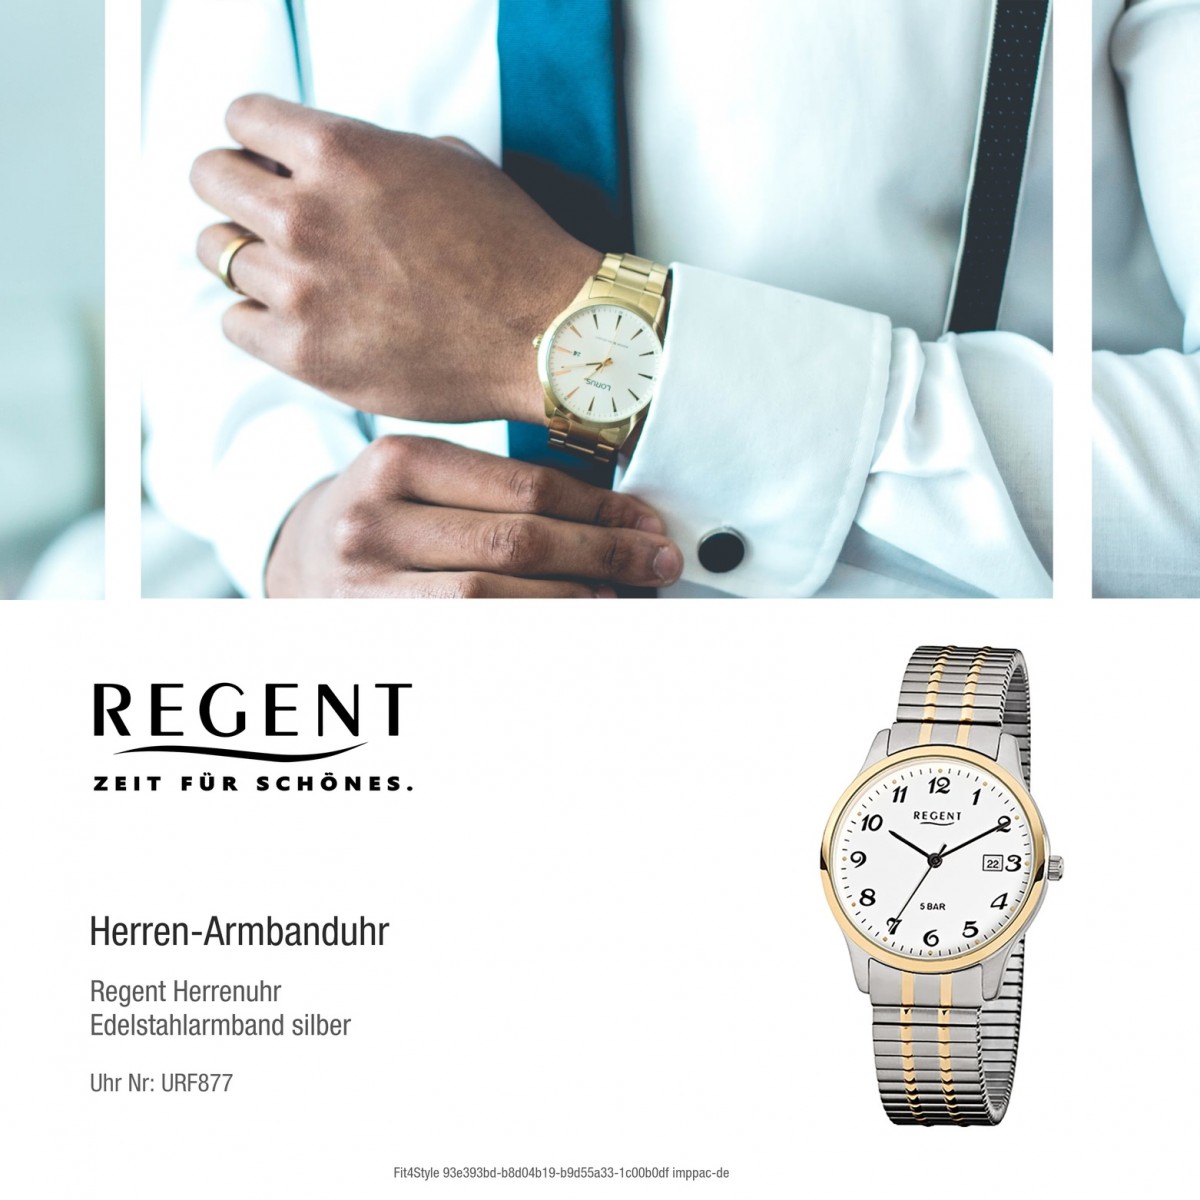 Regent Herren-Armbanduhr F-877 Quarz-Uhr Stahl-Armband URF877 silber gold